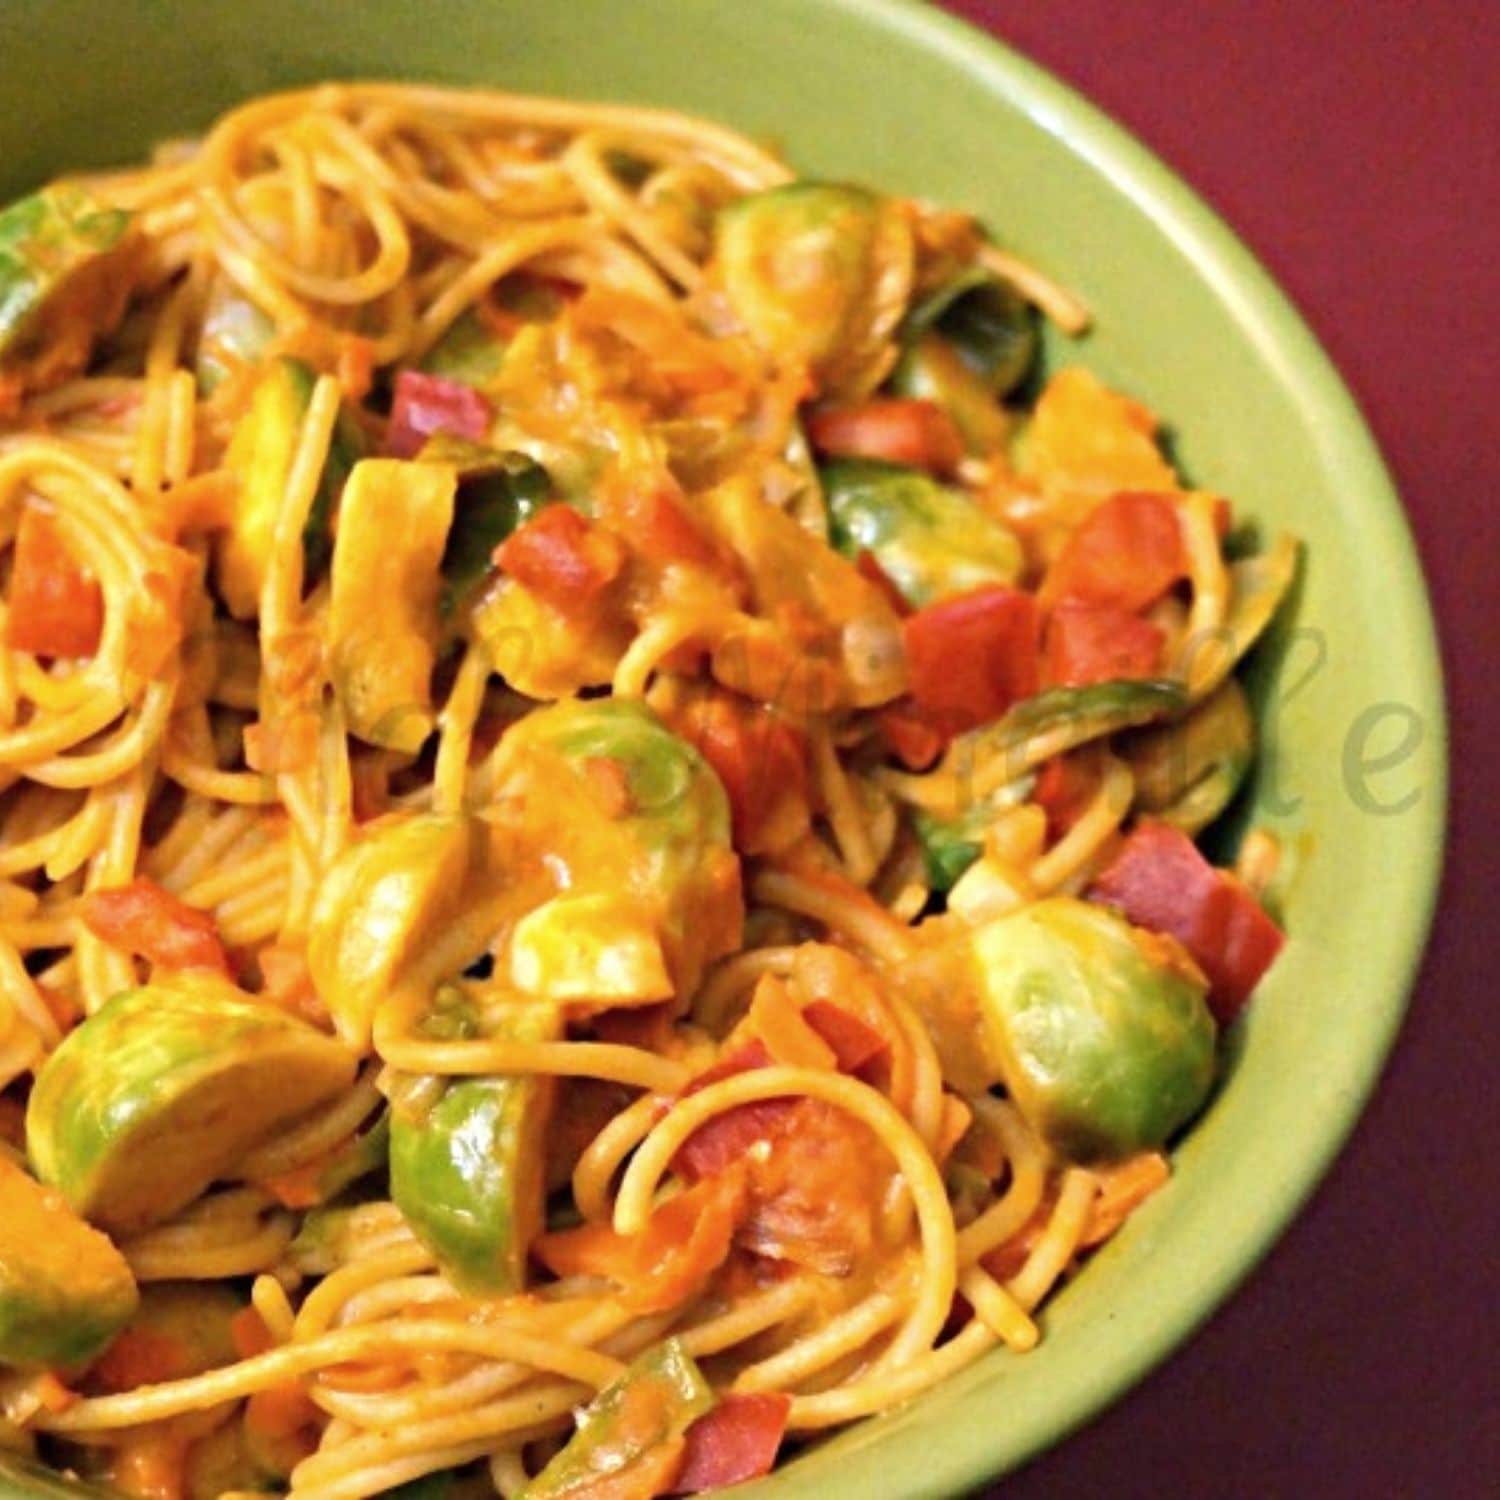 Caribbean Style Spaghetti in a bowl